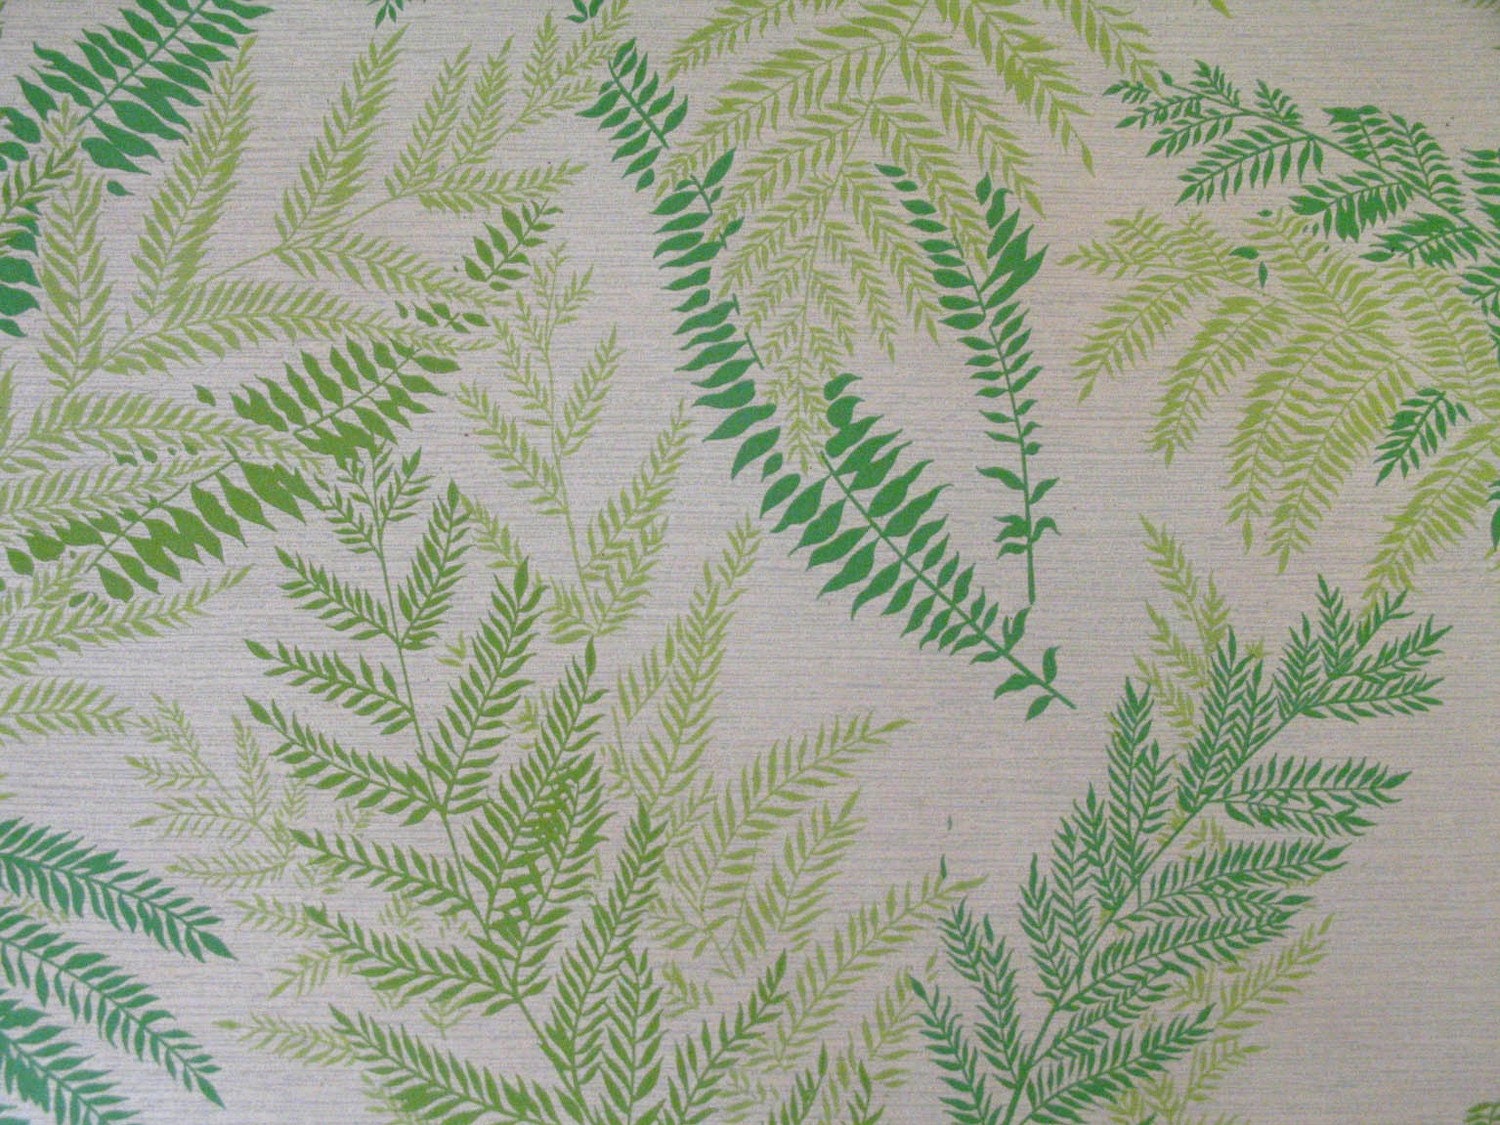 Vintage Fern Leaf Wallpaper Green Silhouette Afalchi Free images wallpape [afalchi.blogspot.com]